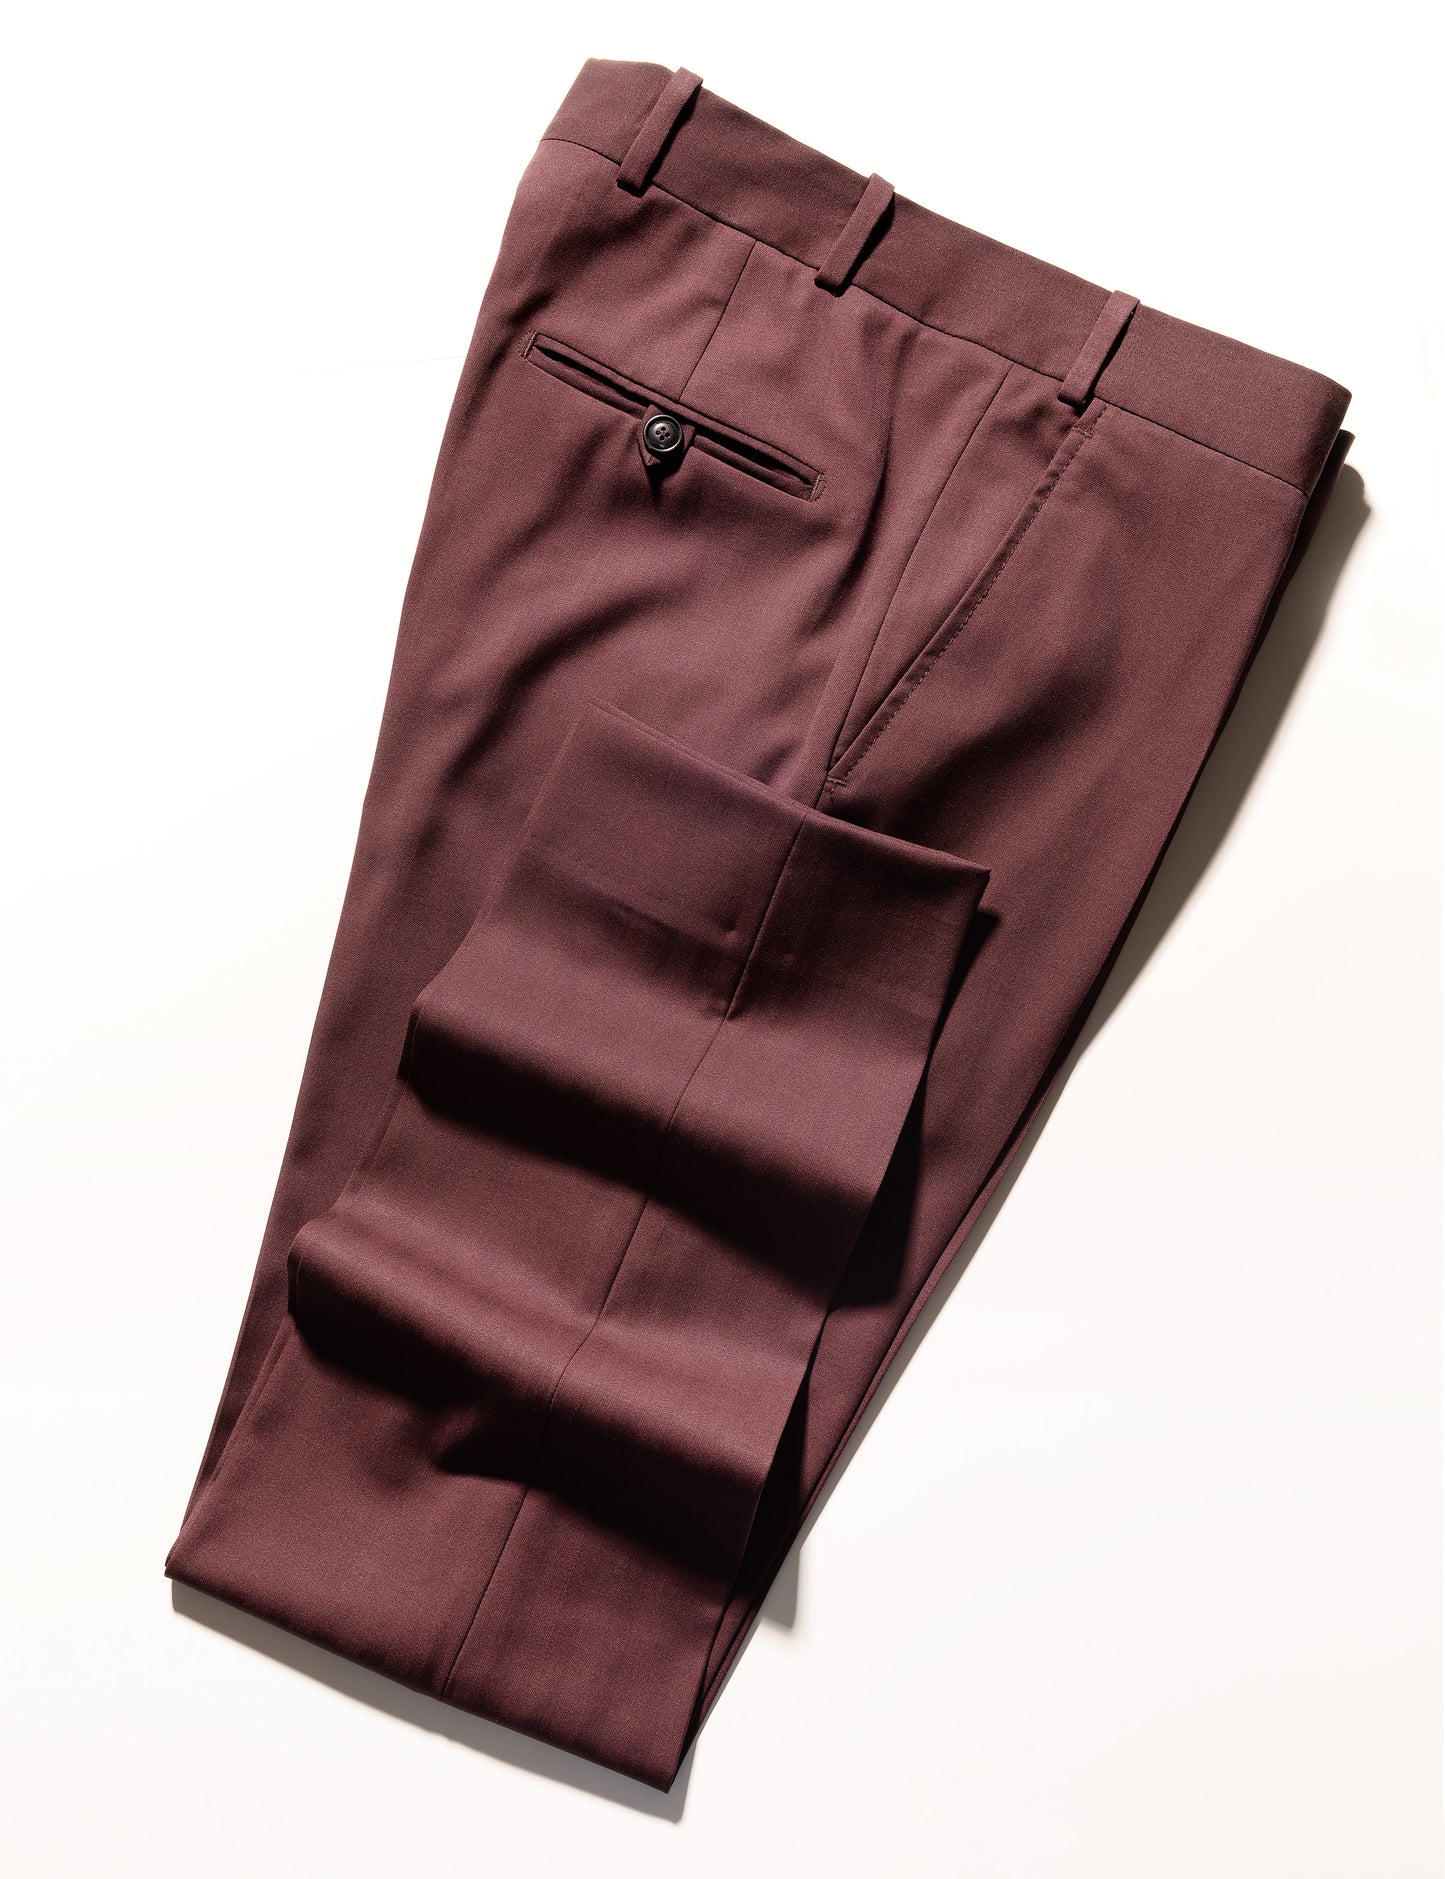 BKT50 Tailored Trousers in Wool Herringbone - Syrah